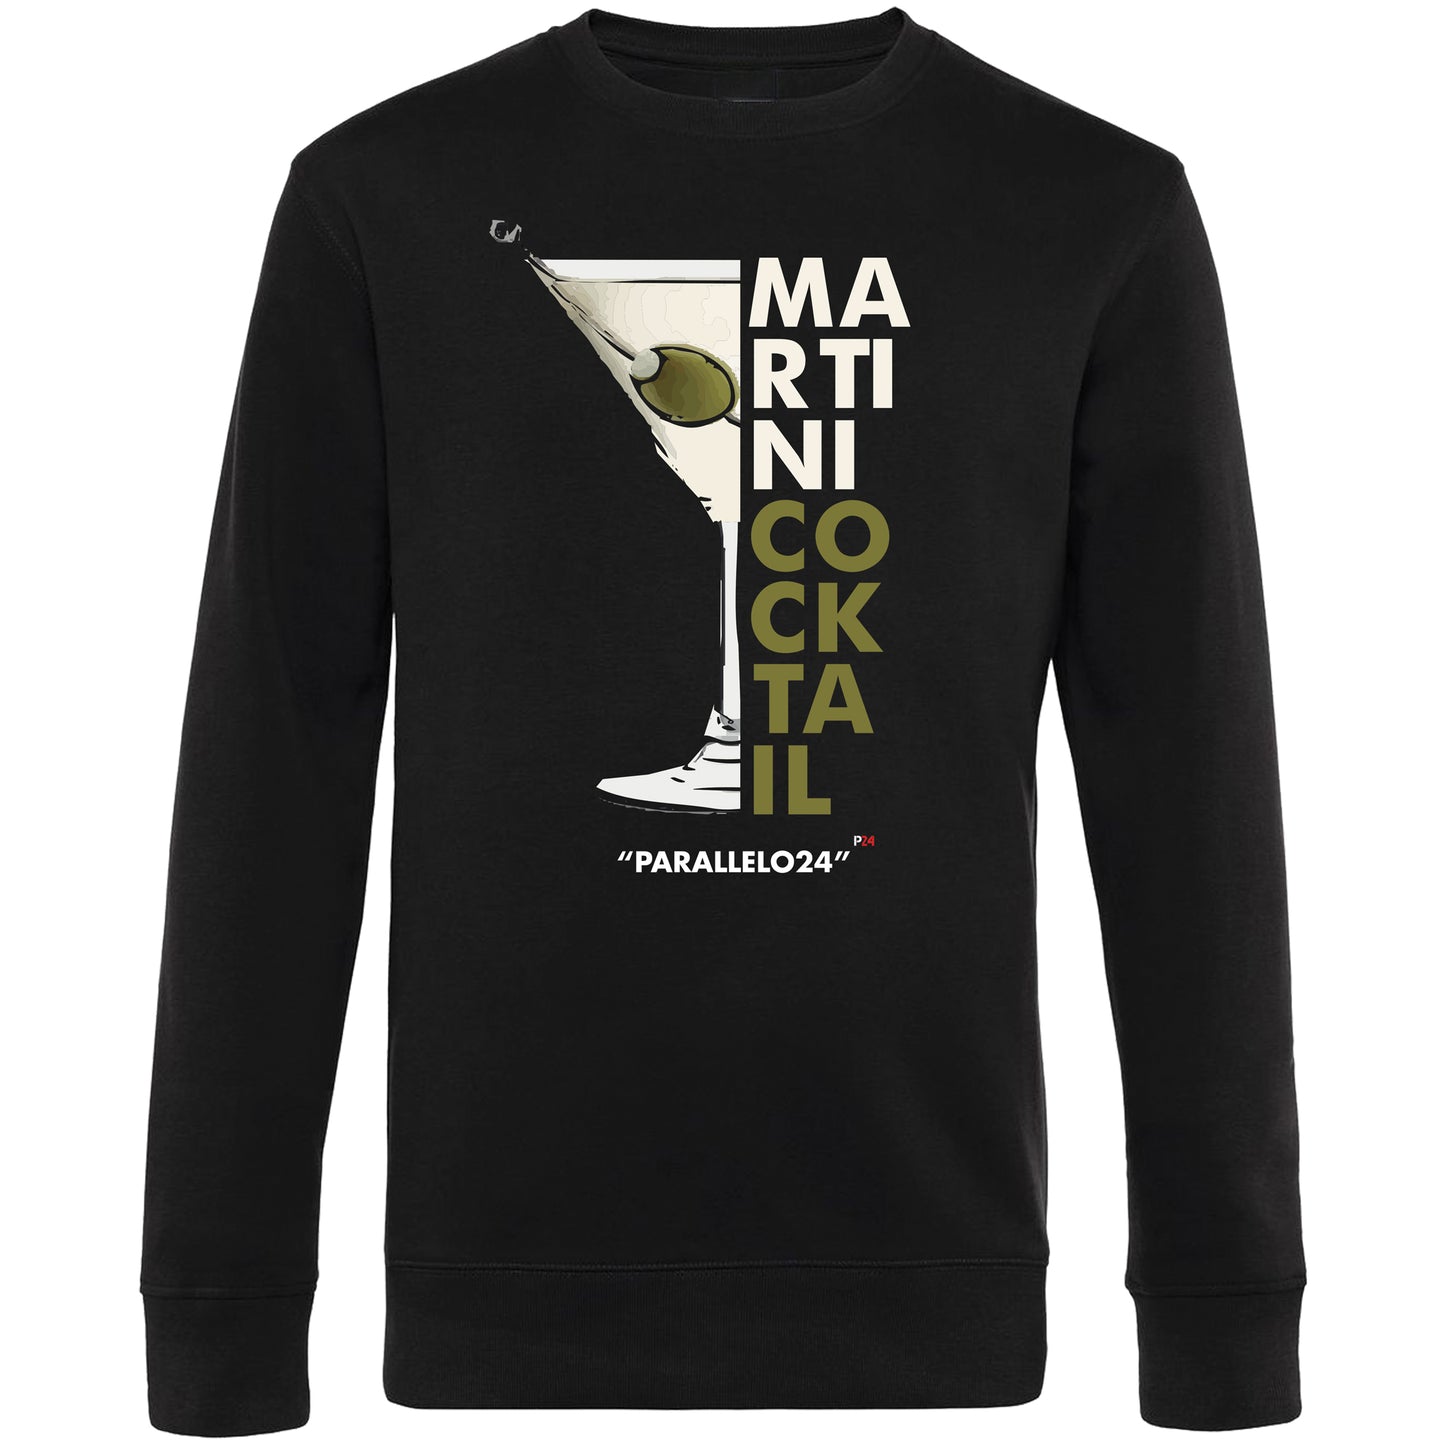 "Martini Cocktail" Parallelo24